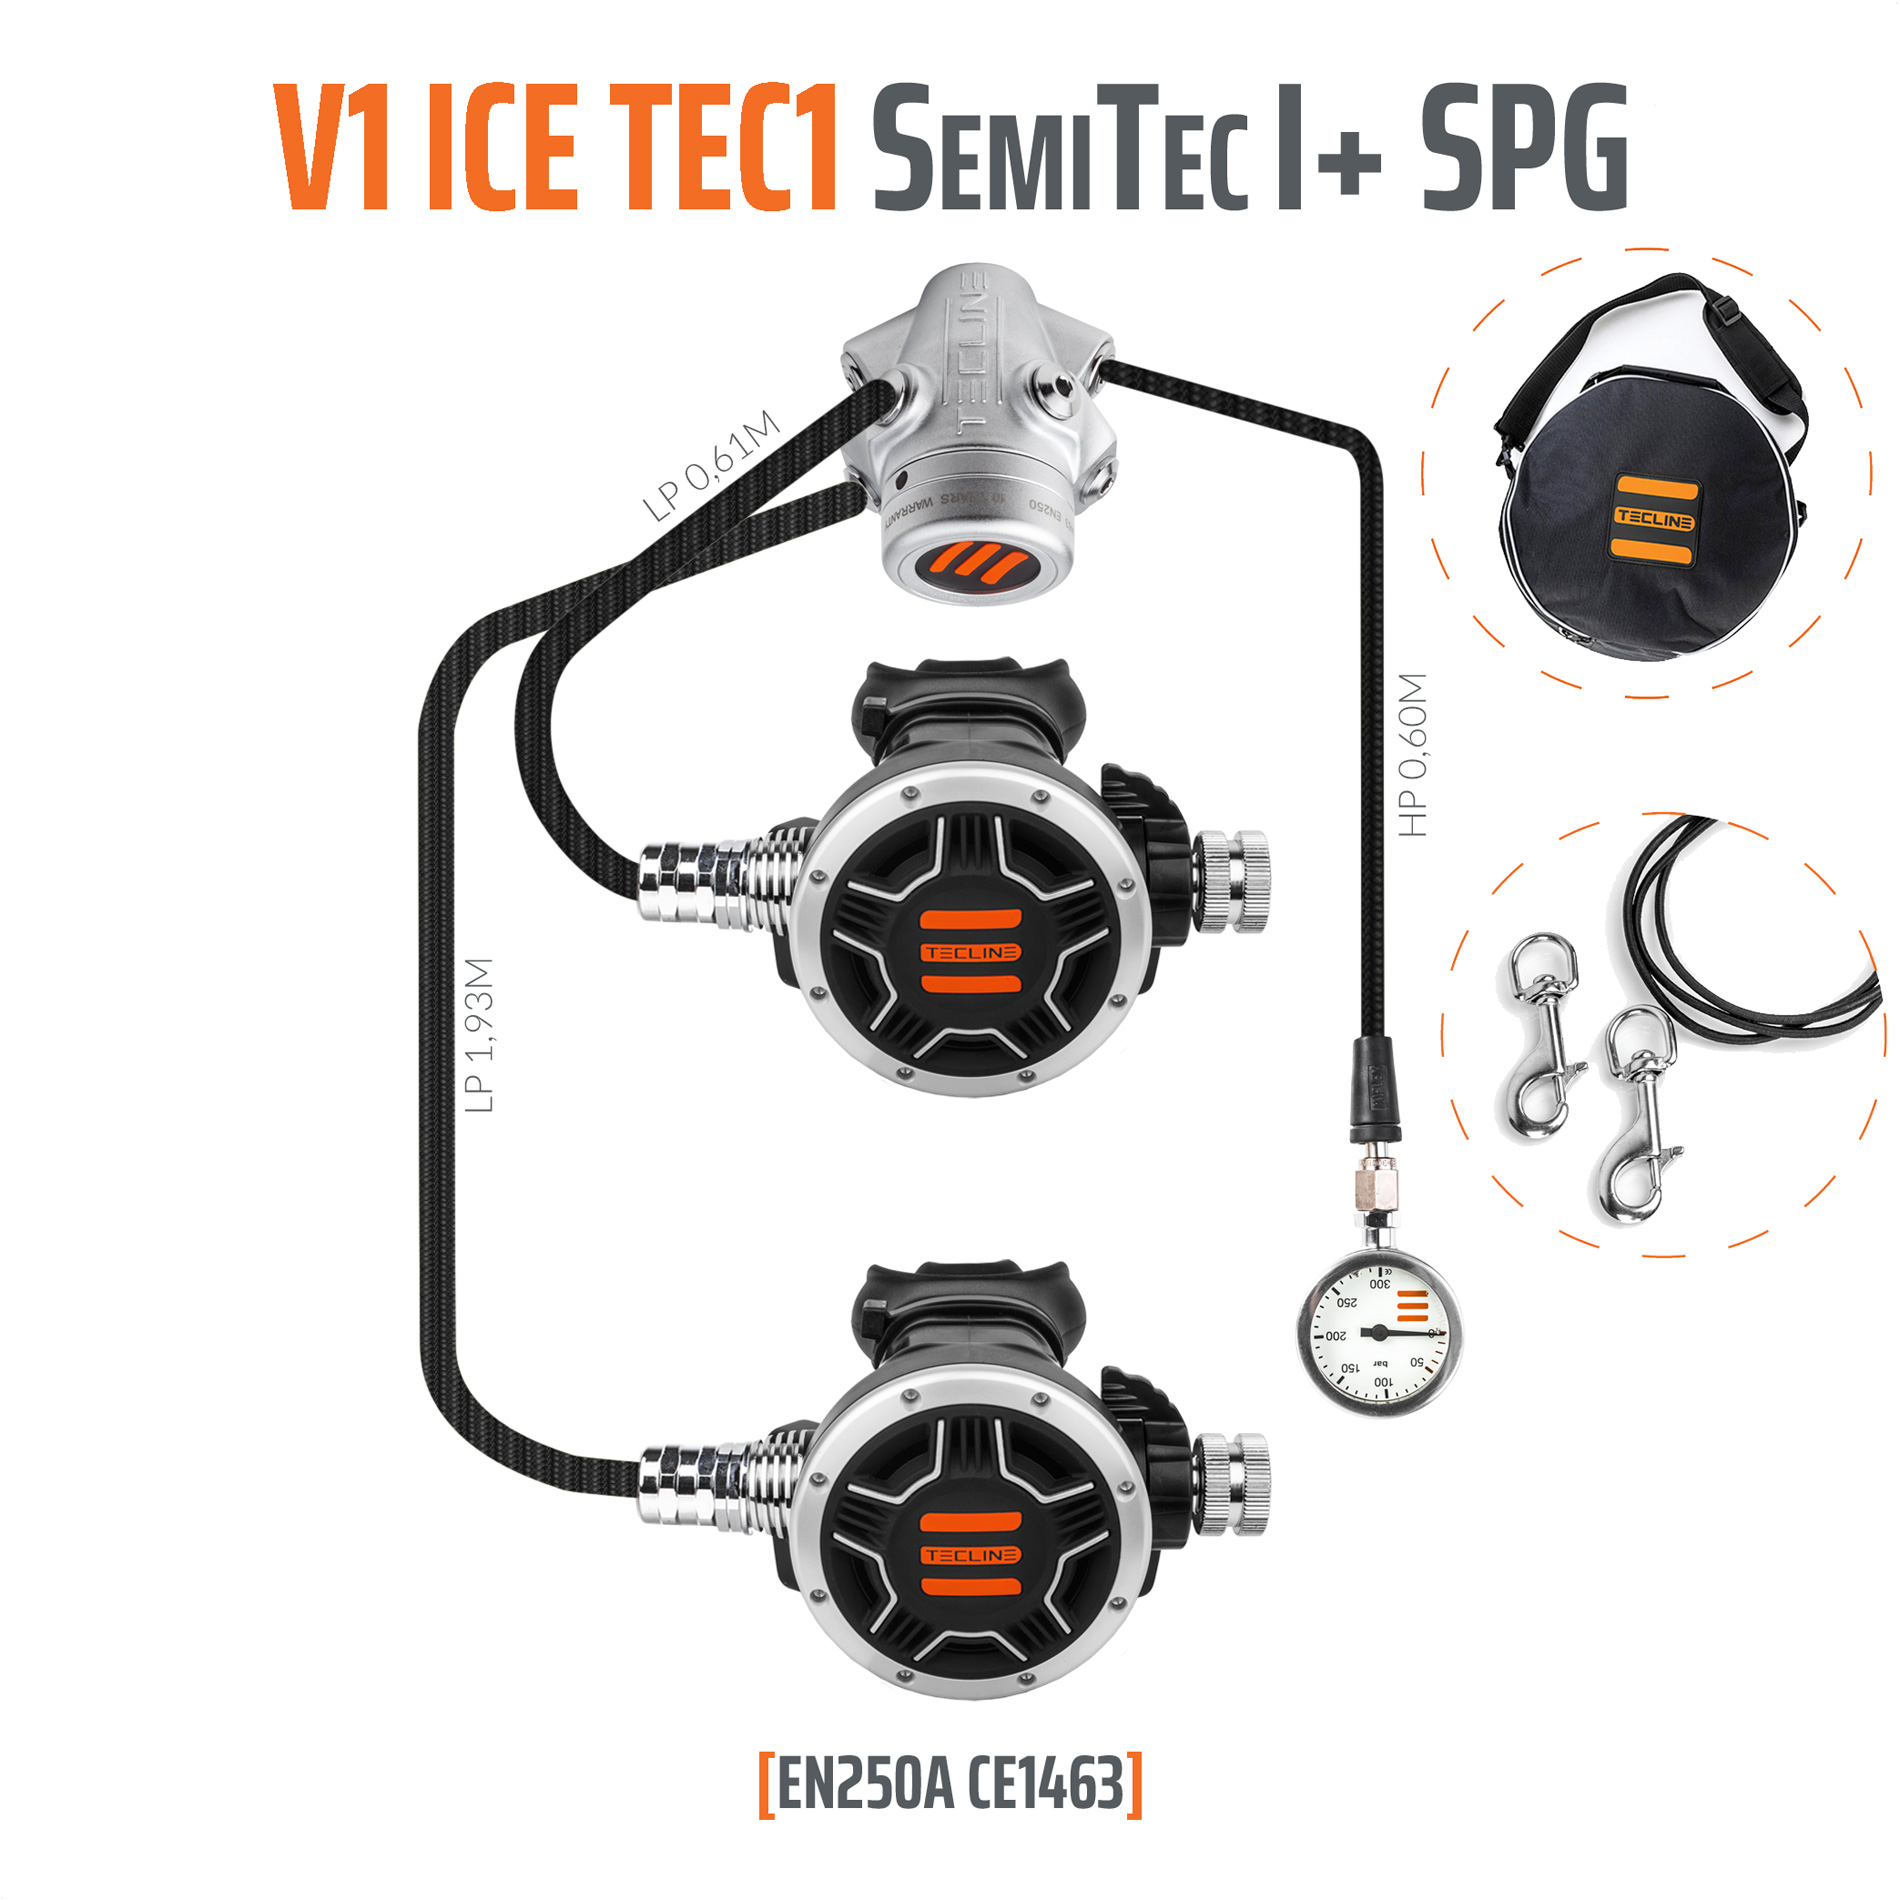 Tecline Regulator V1 ICE TEC1 SemiTec I with SPG – EN250A